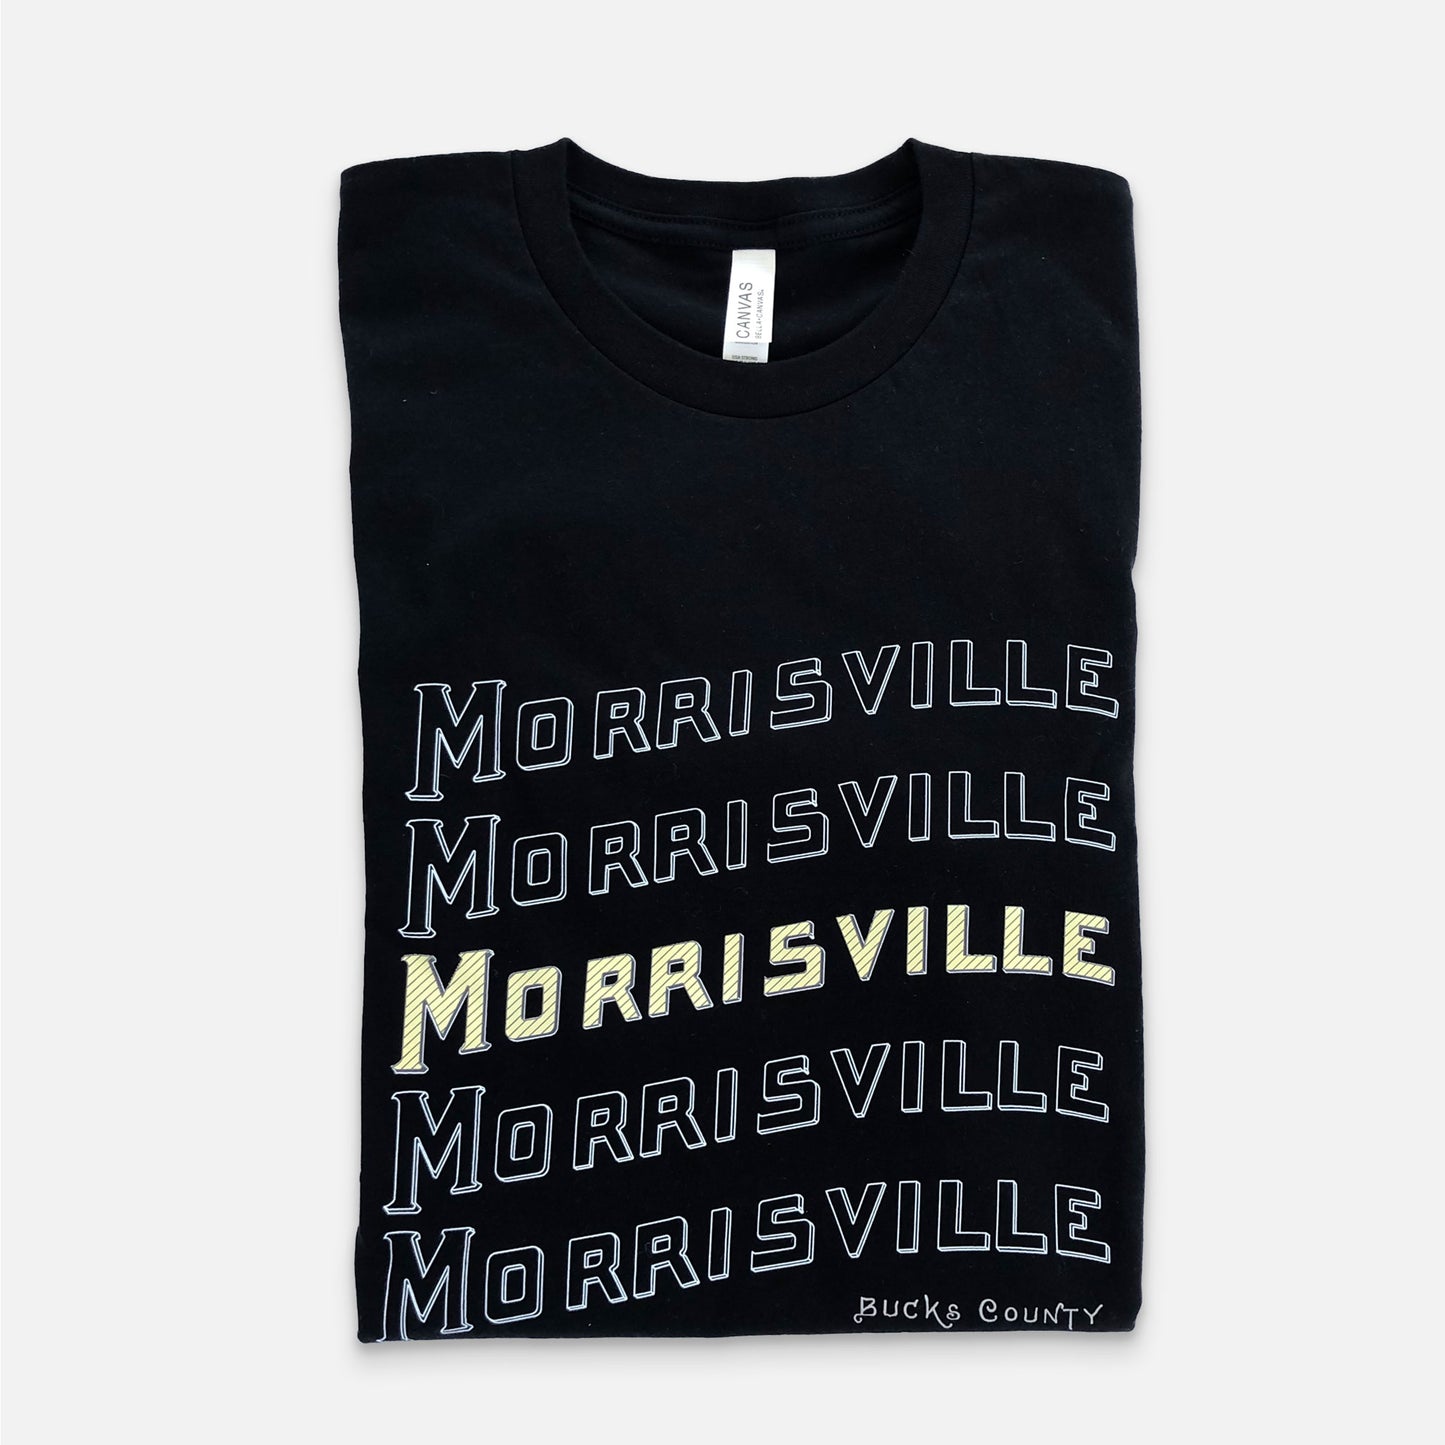 Morrisville graphic T-shirt - black